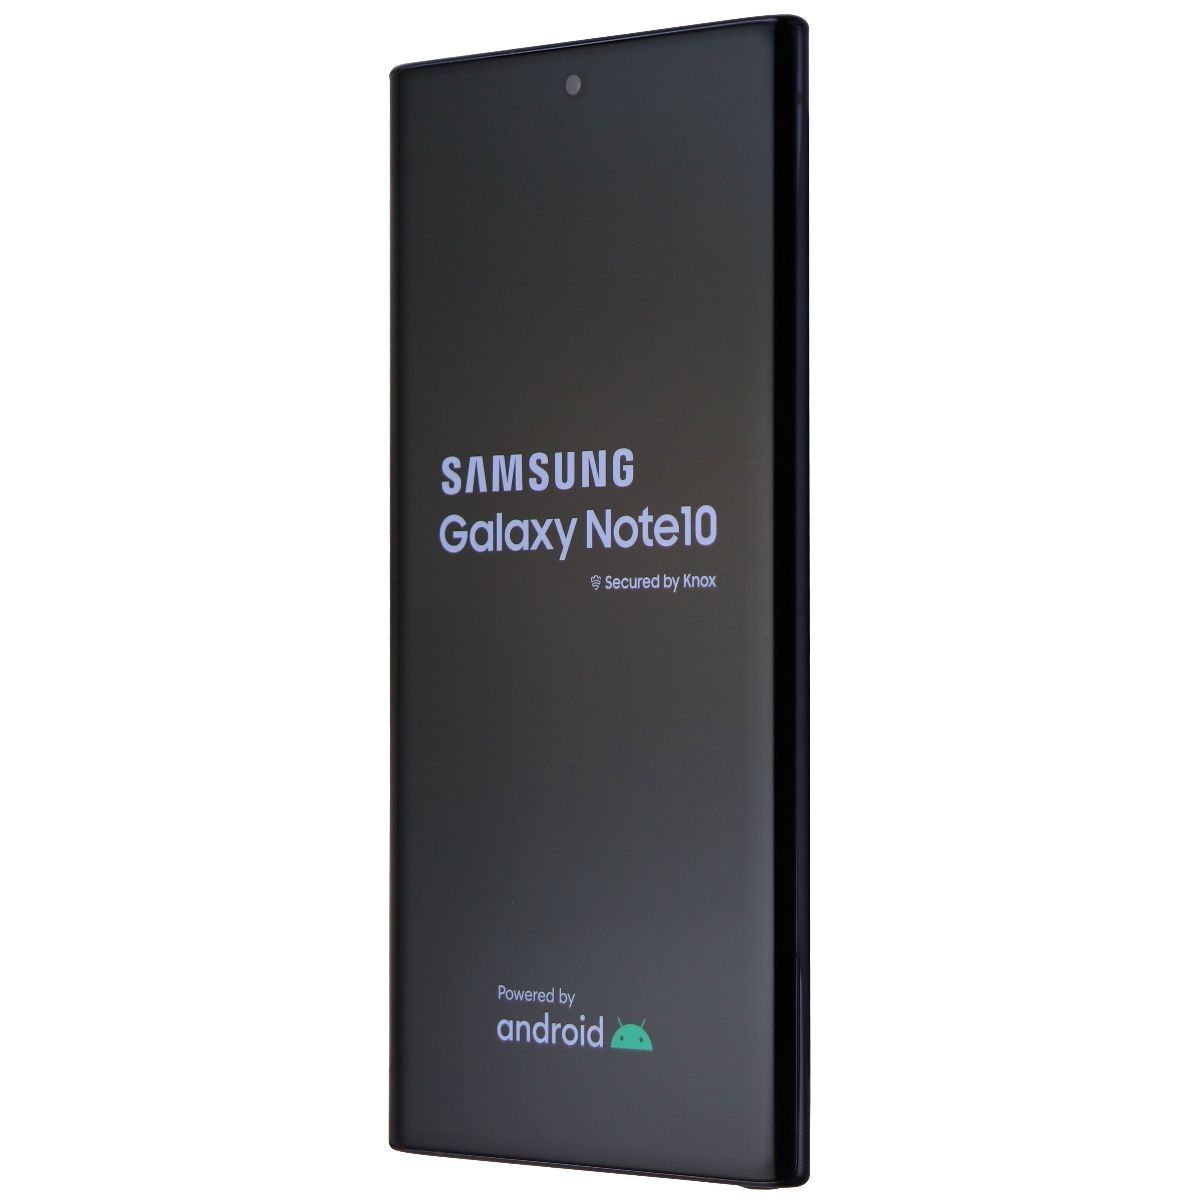 Samsung Galaxy Note10 (6.3-in) (SM-N970U) Unlocked - 256GB/Aura Black Cell Phones & Smartphones Samsung    - Simple Cell Bulk Wholesale Pricing - USA Seller